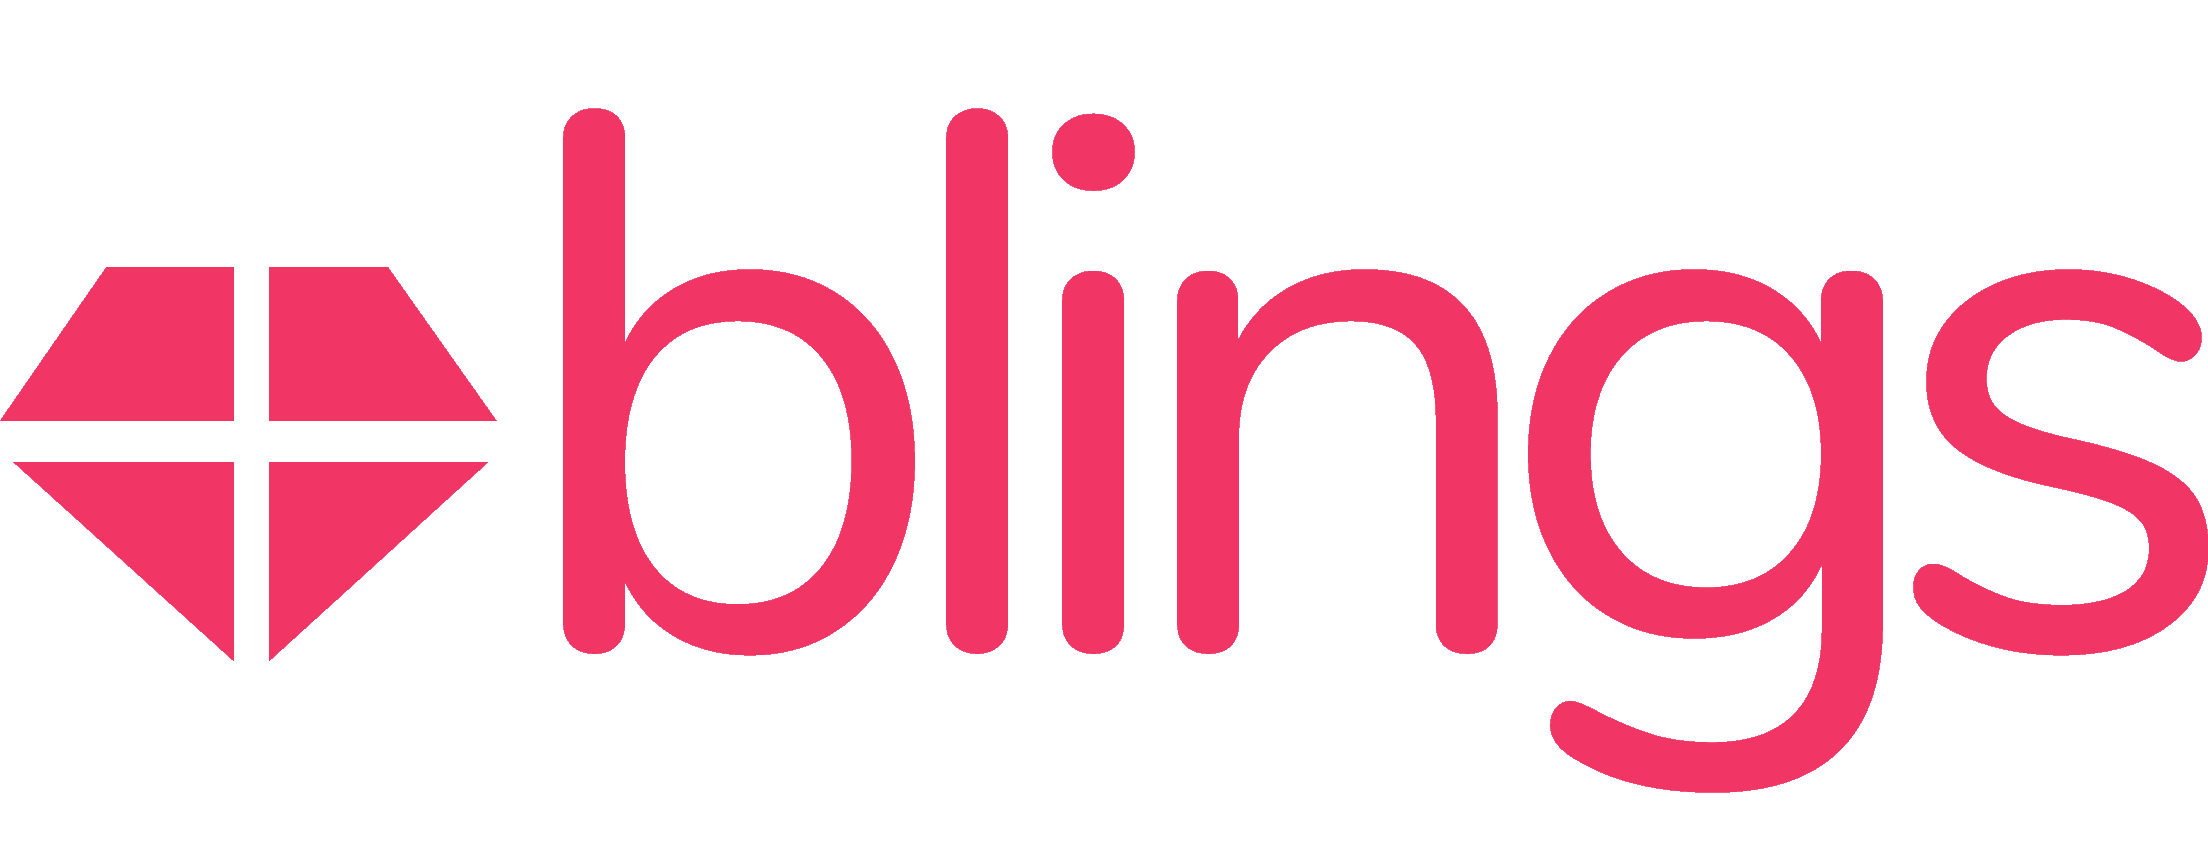 Blings.io logo